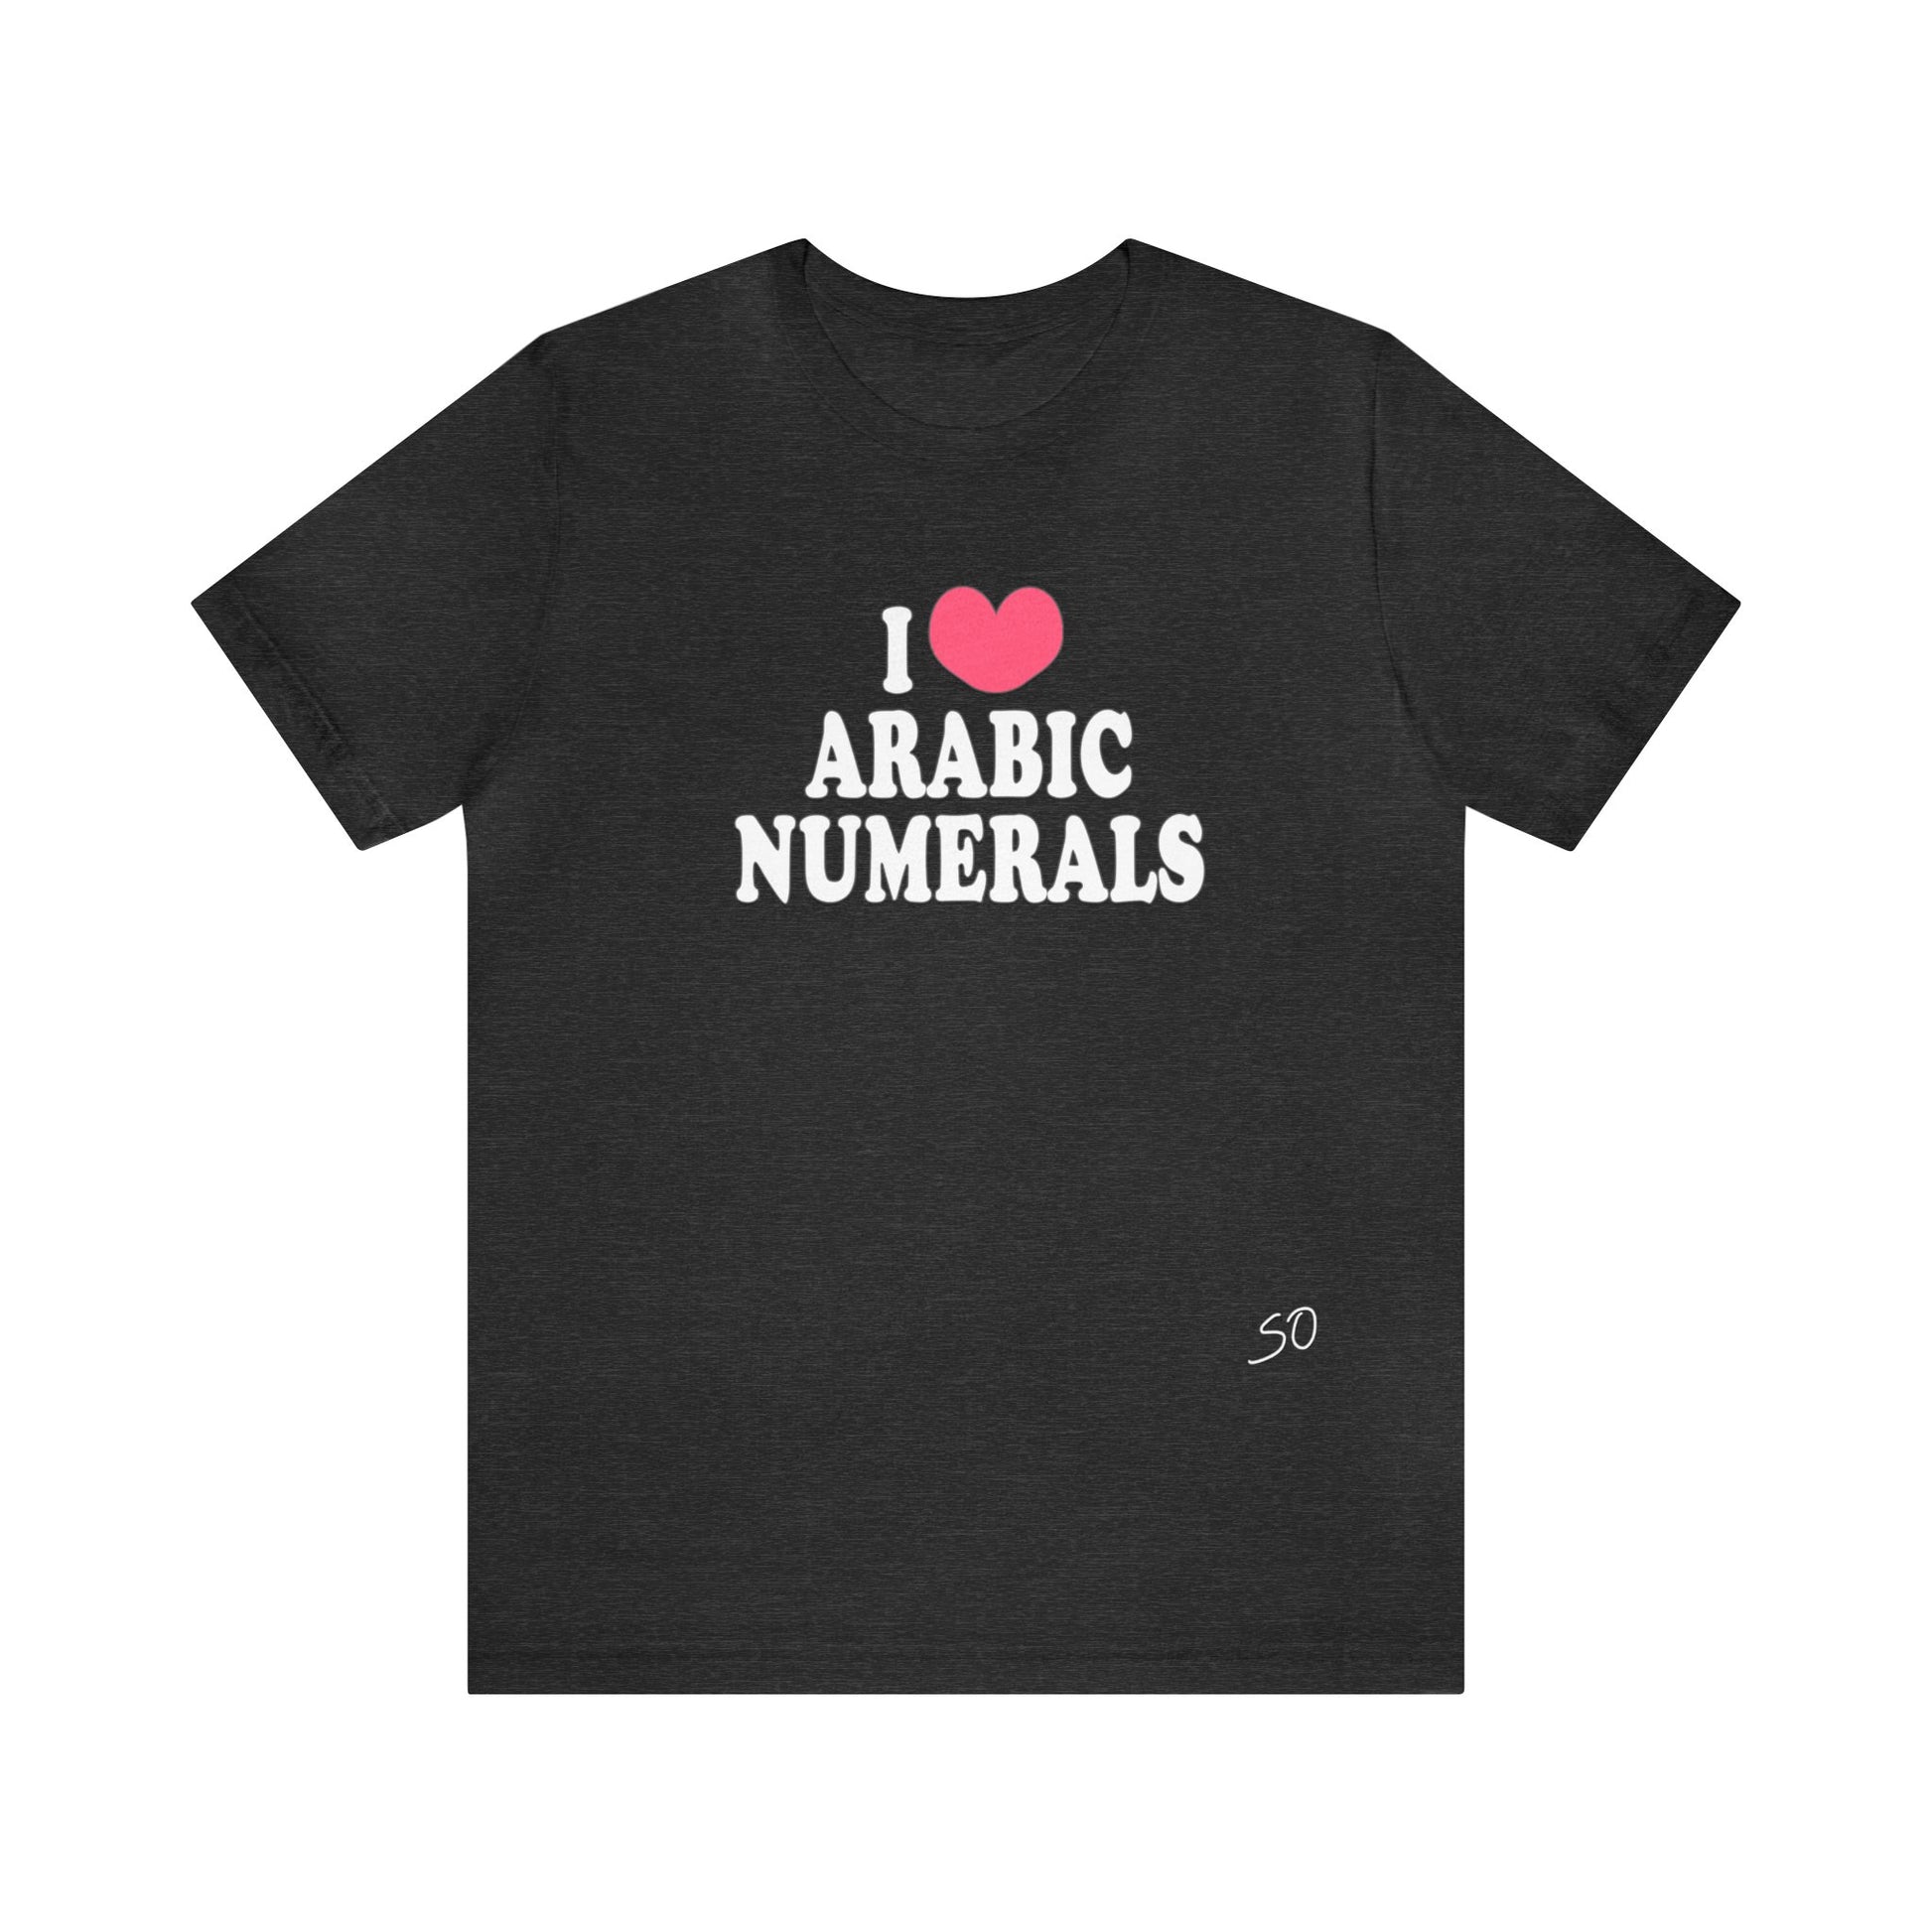 I Love Arabic Numerals - Sammy Obeid